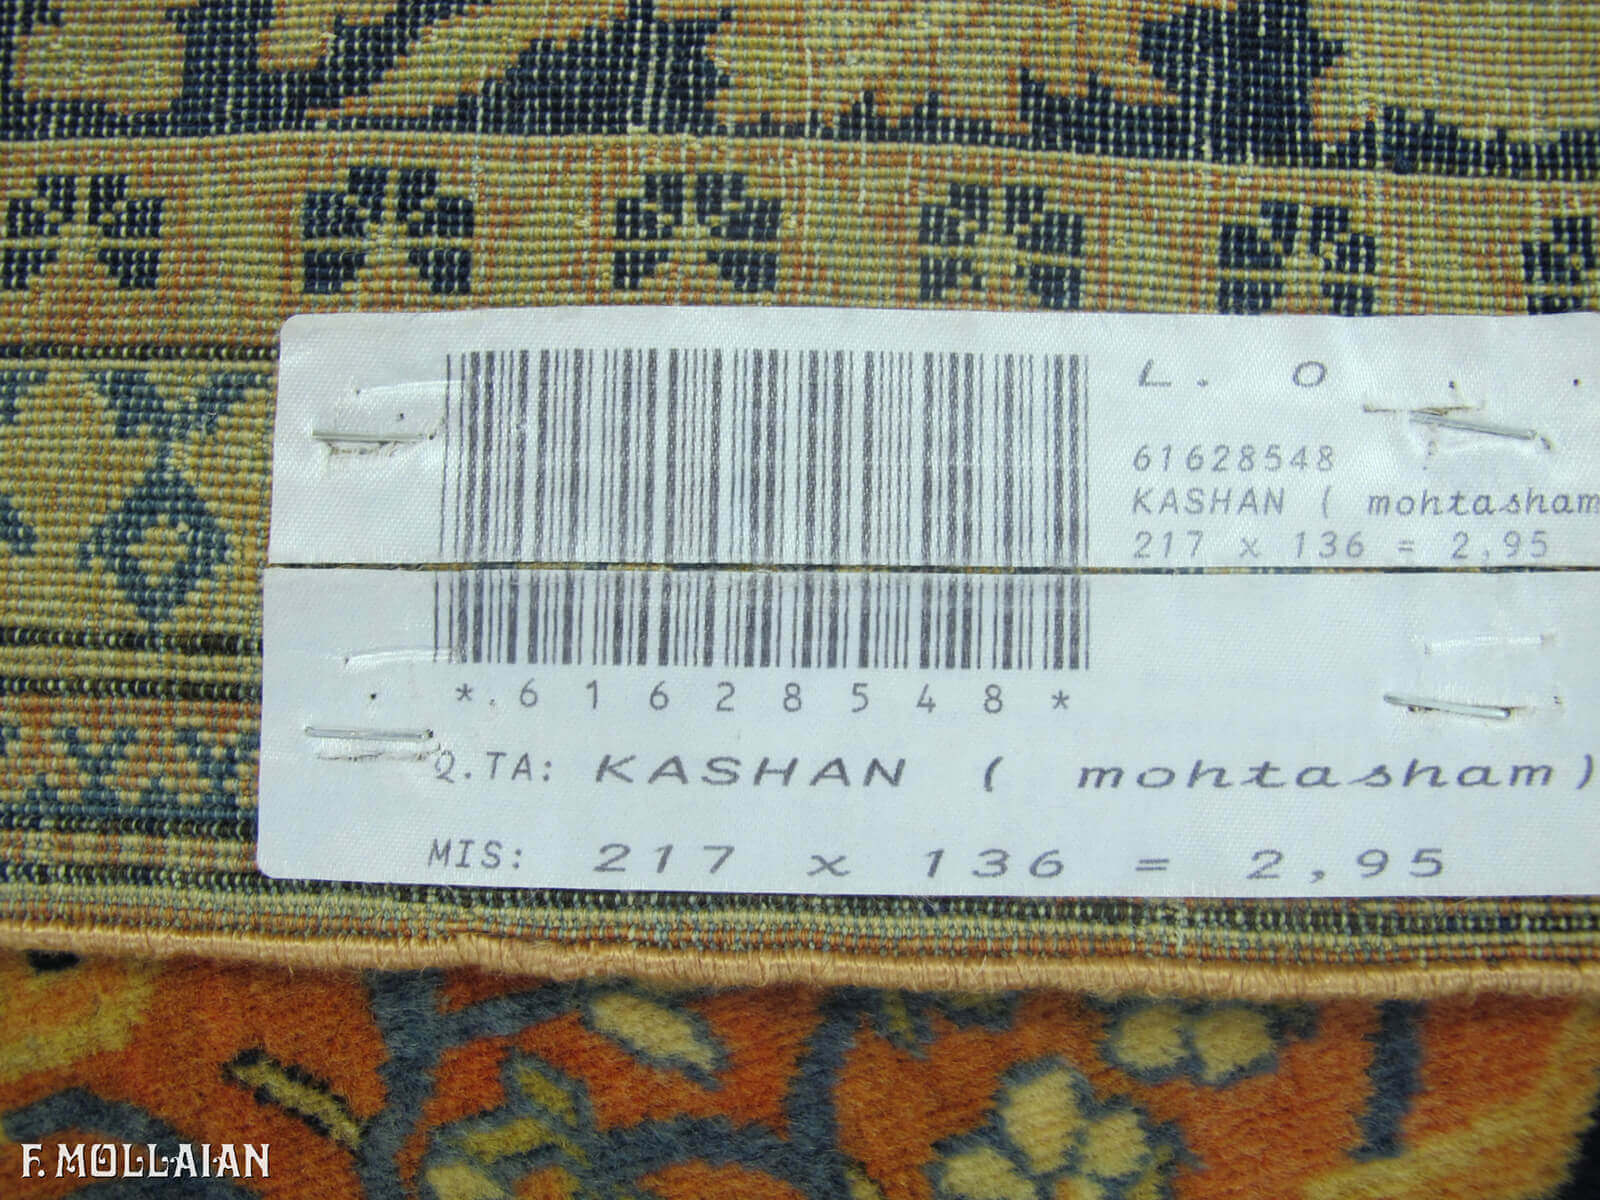 Antique Persian Kashan Mohtasham Rug n°:61628548